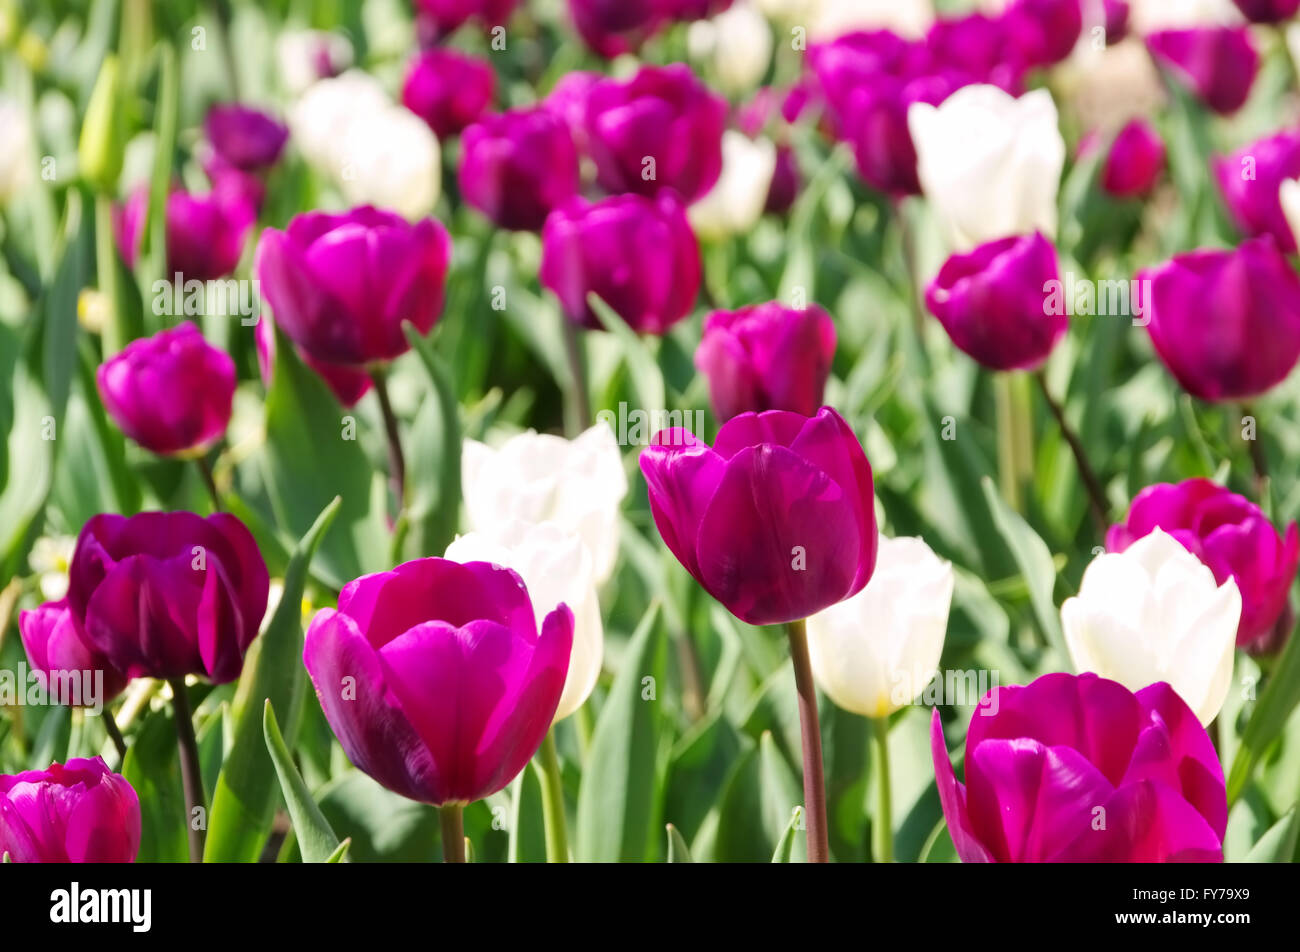 Tulpen lila und weiss - tulips purple and white 01 Stock Photo